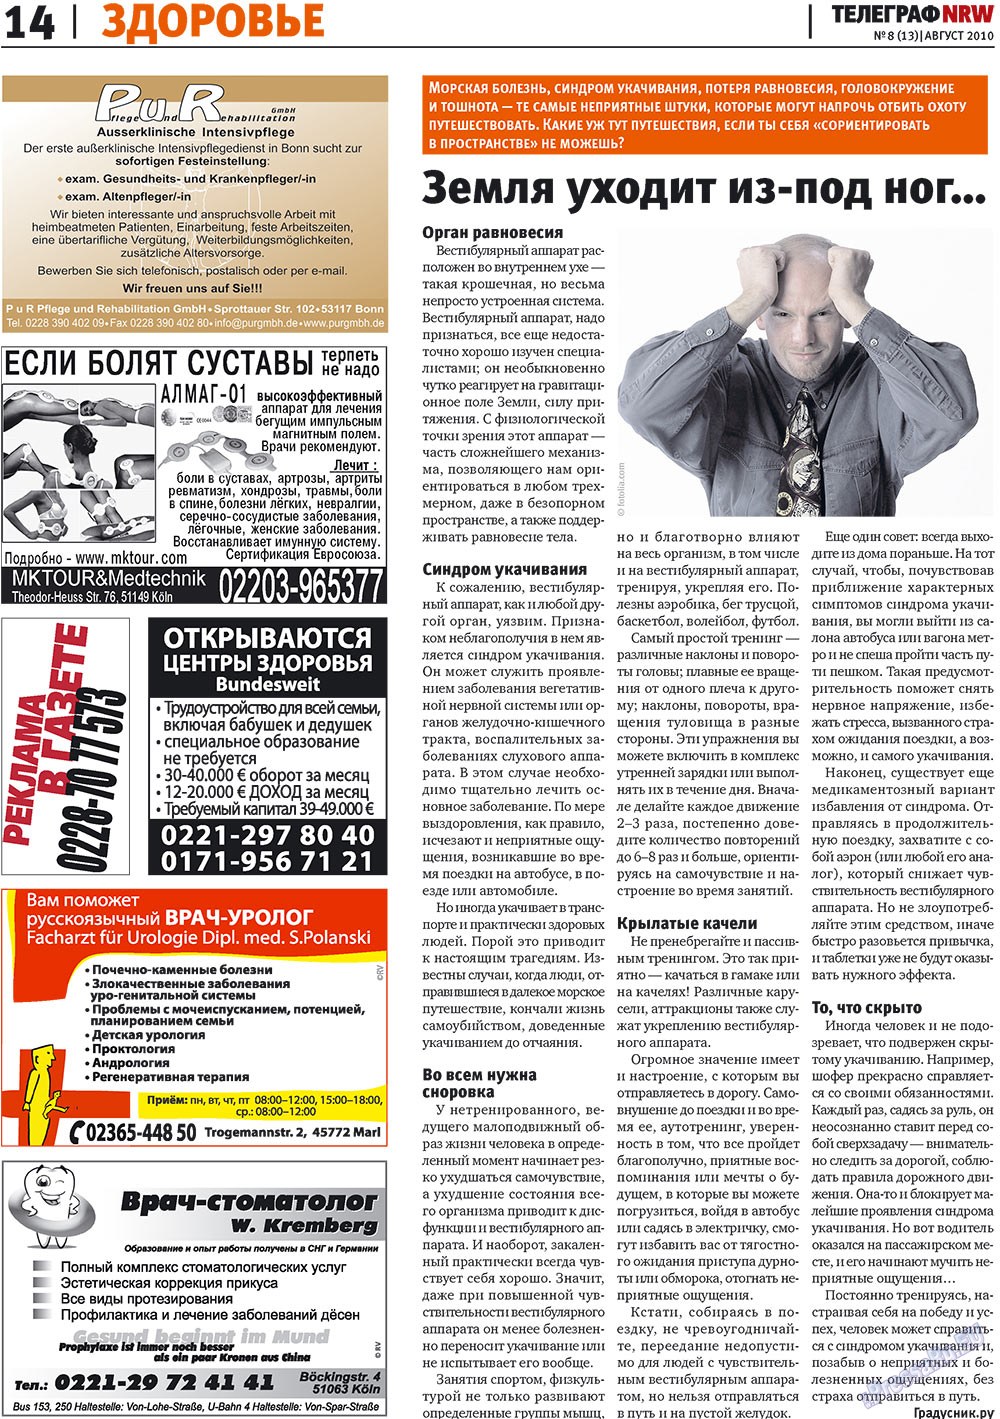 Телеграф NRW, газета. 2010 №8 стр.14